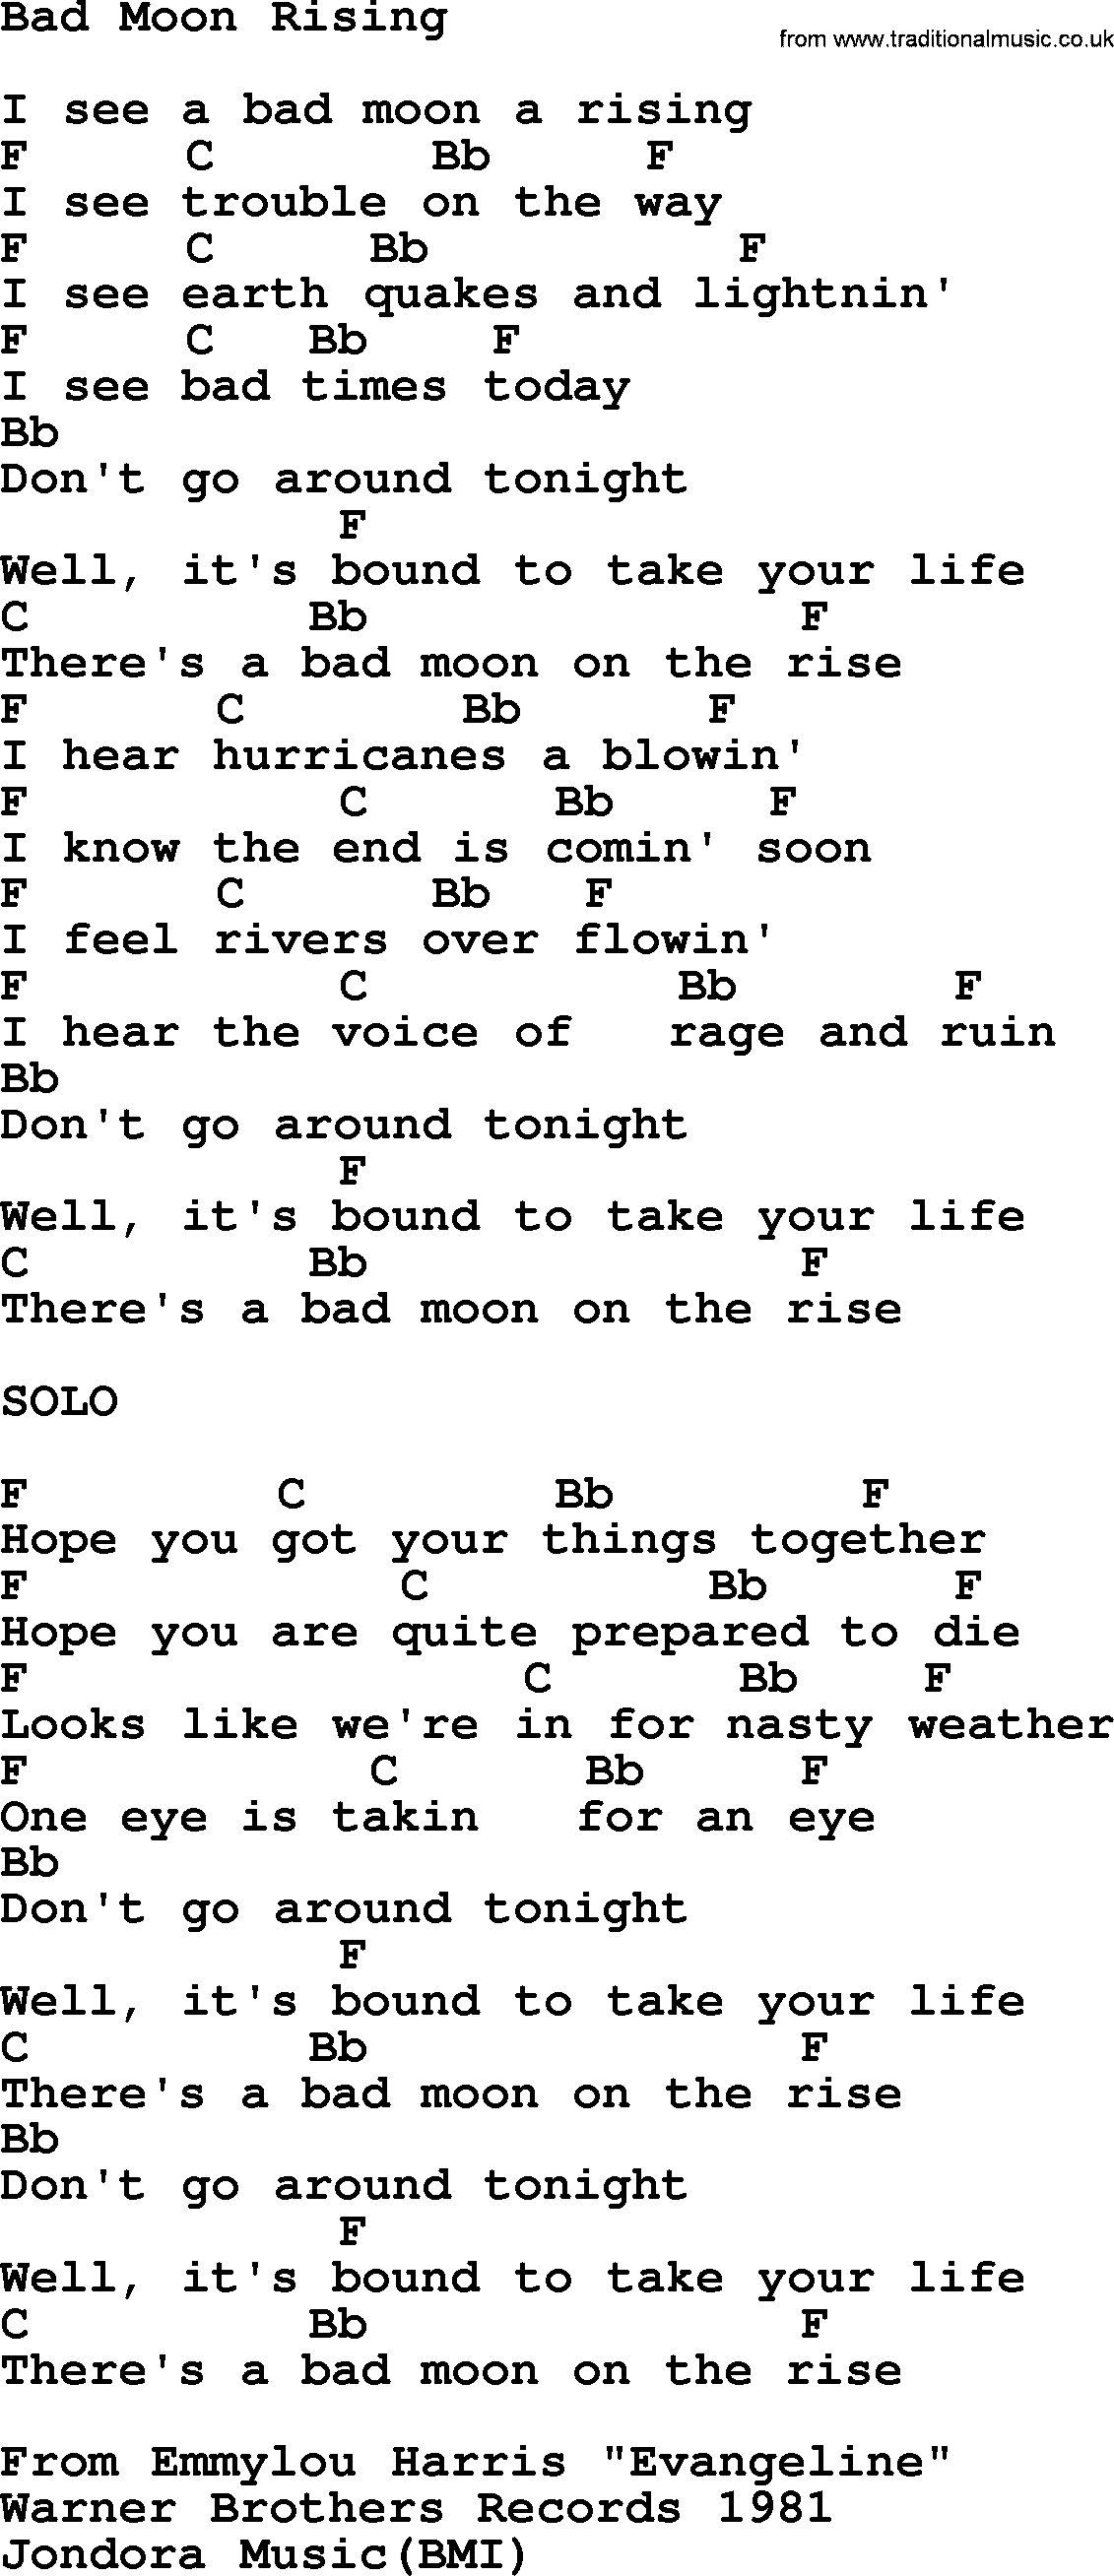 Emmylou Harris song: Bad Moon Rising lyrics and chords